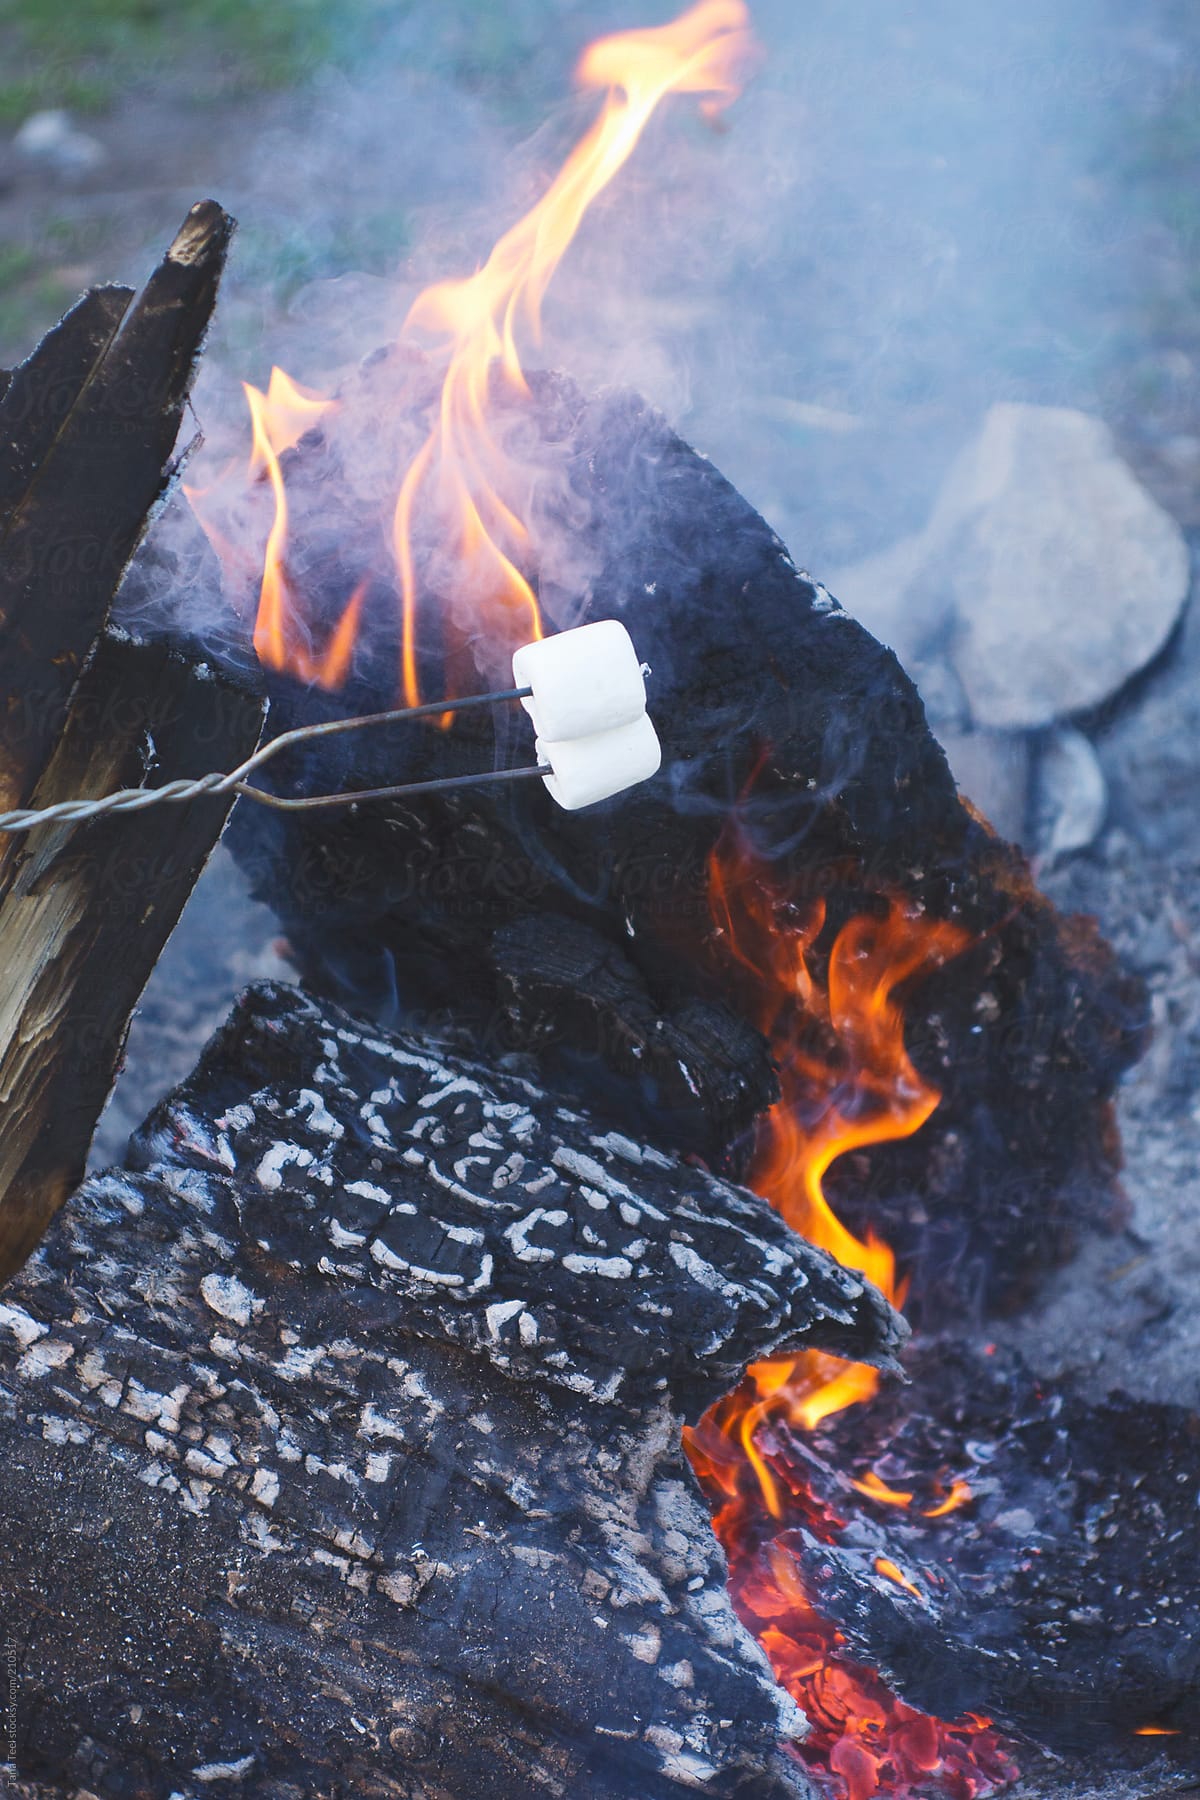 Marshmallows roasting over an open campfire